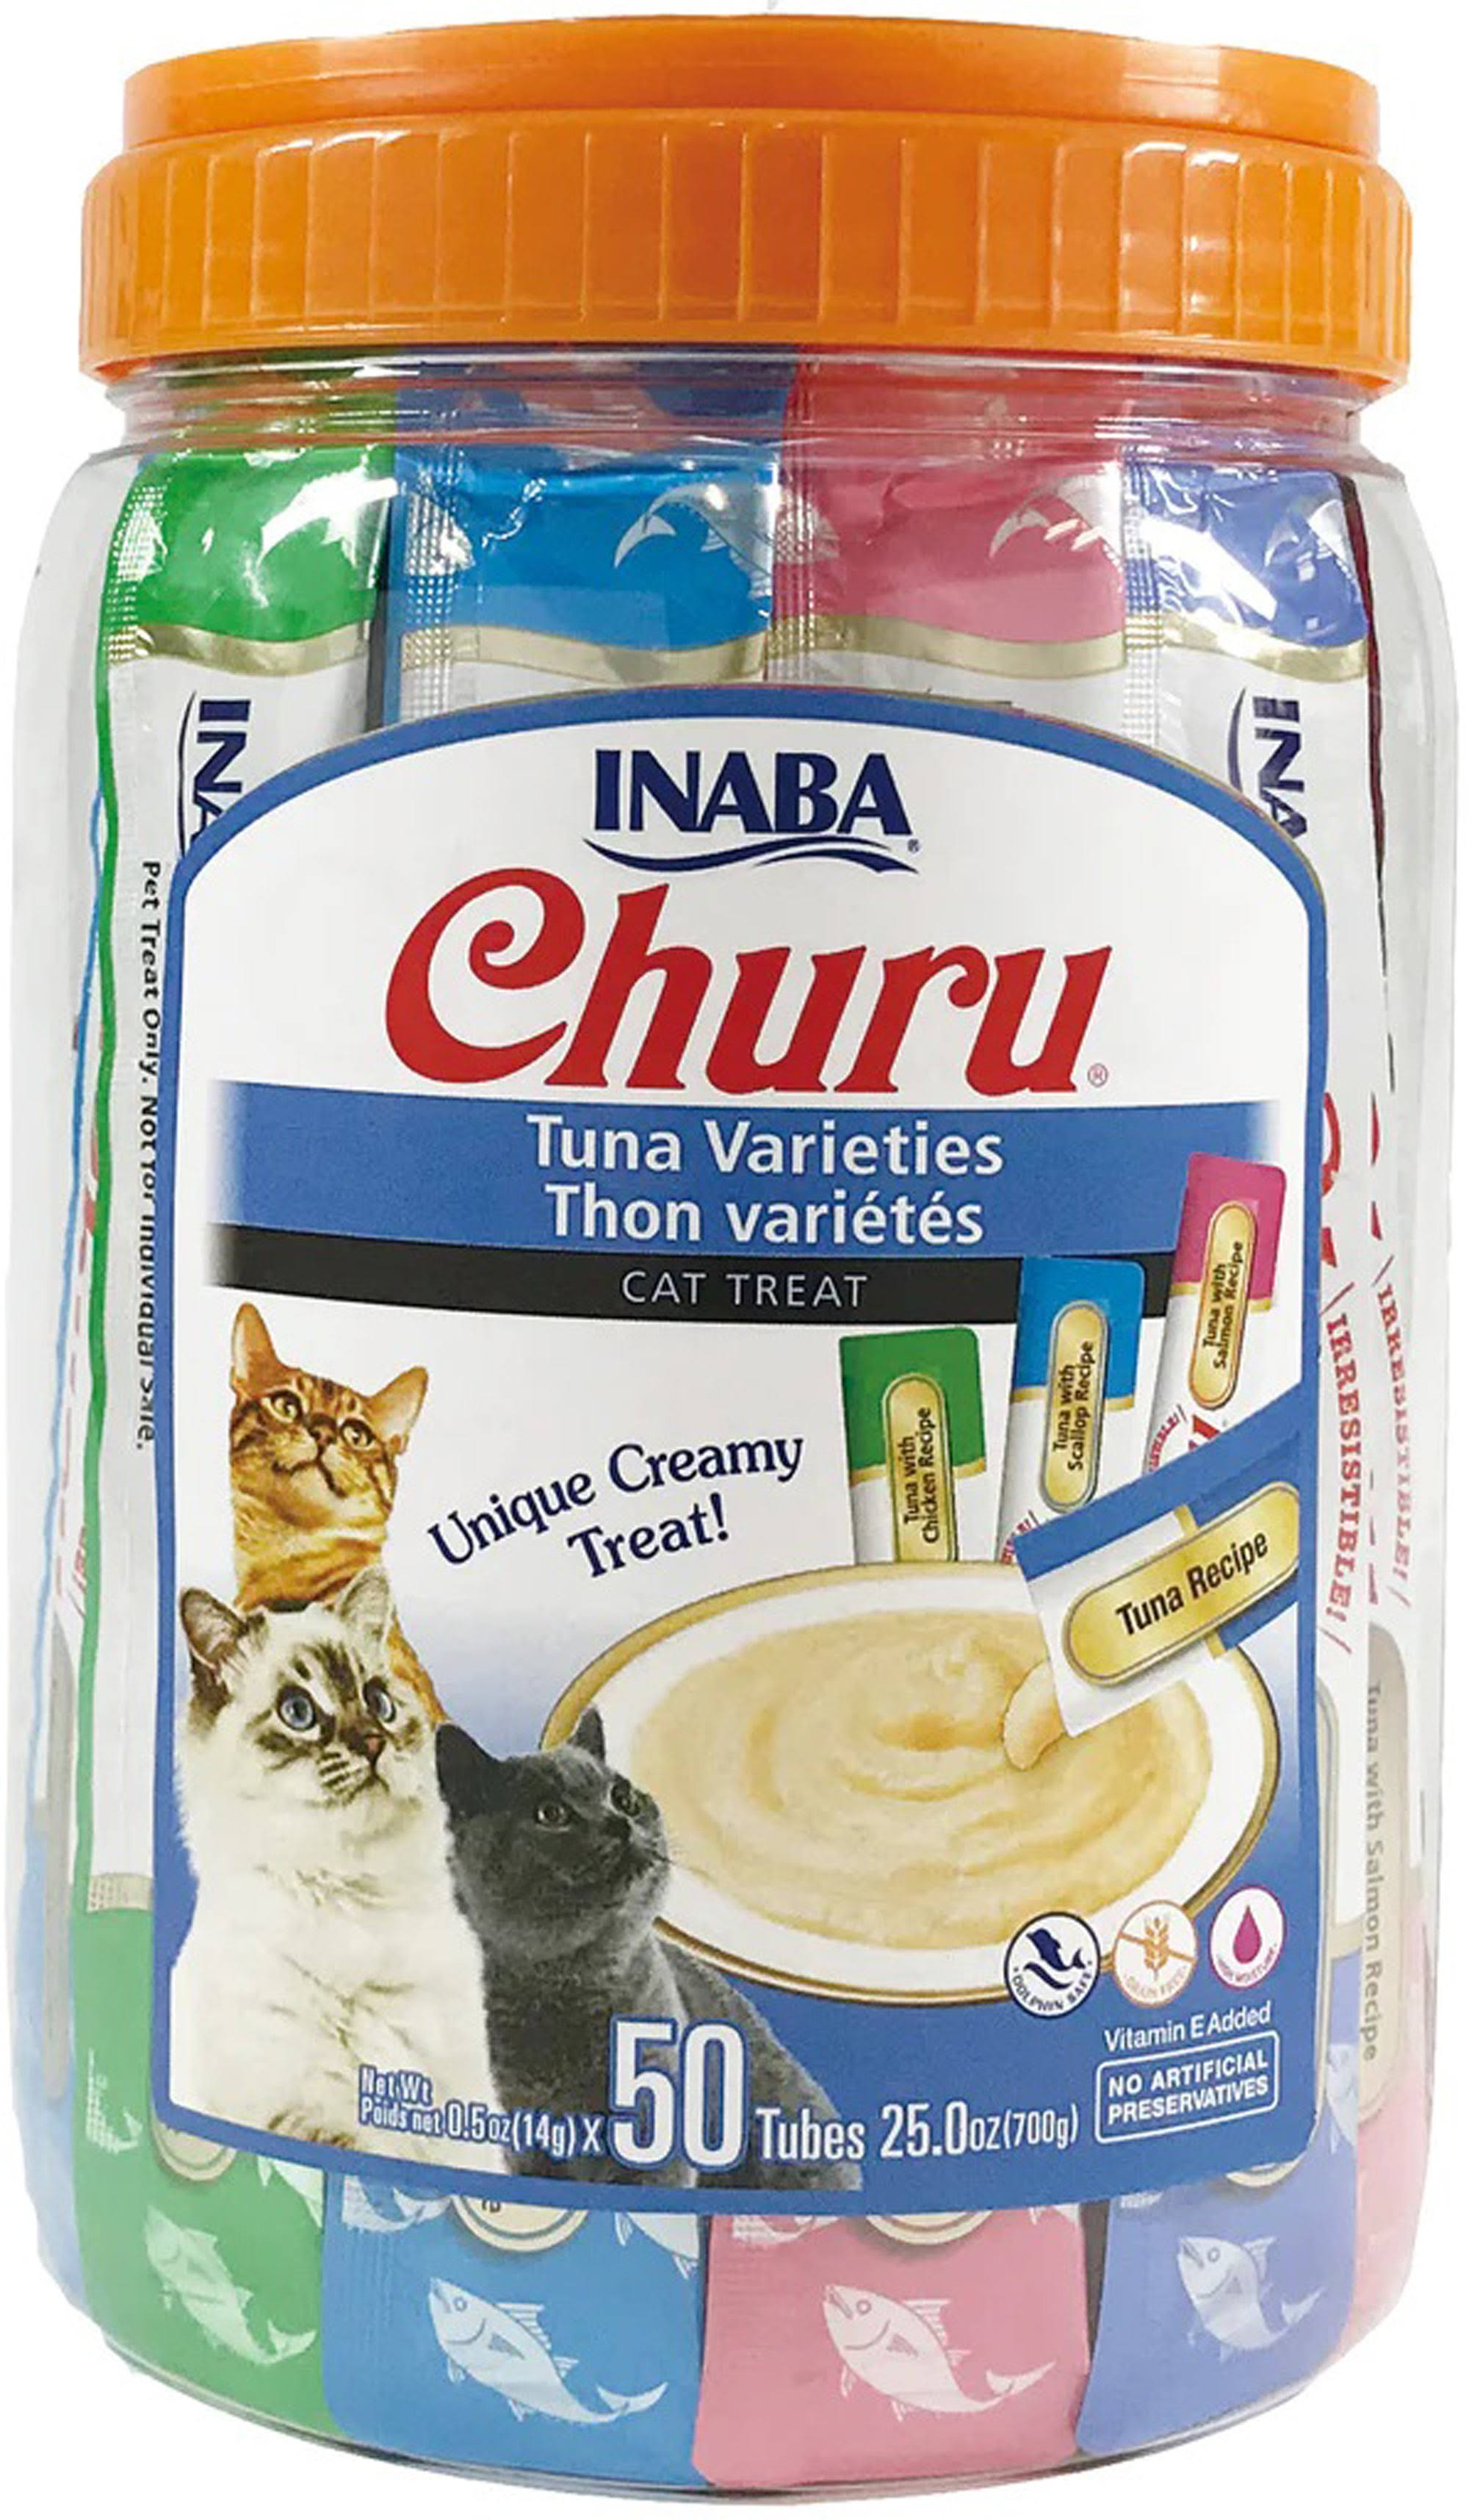 Inaba Churu Tuna Varieties 50 pack